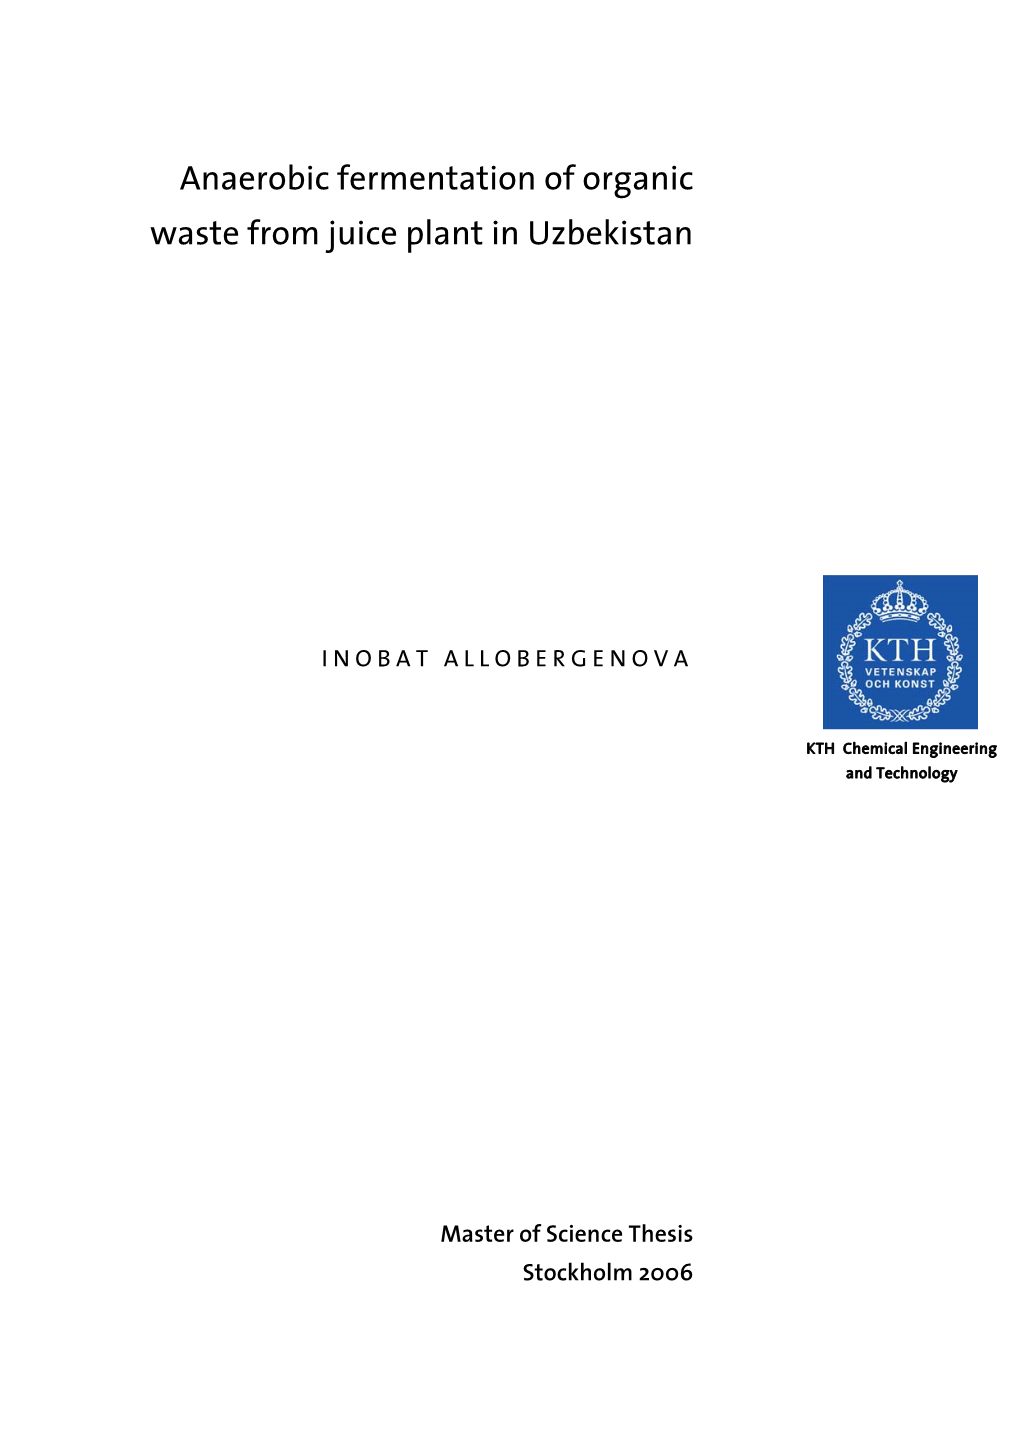 Anaerobic Fermentation of Organic Waste from Juice Plant in Uzbekistan